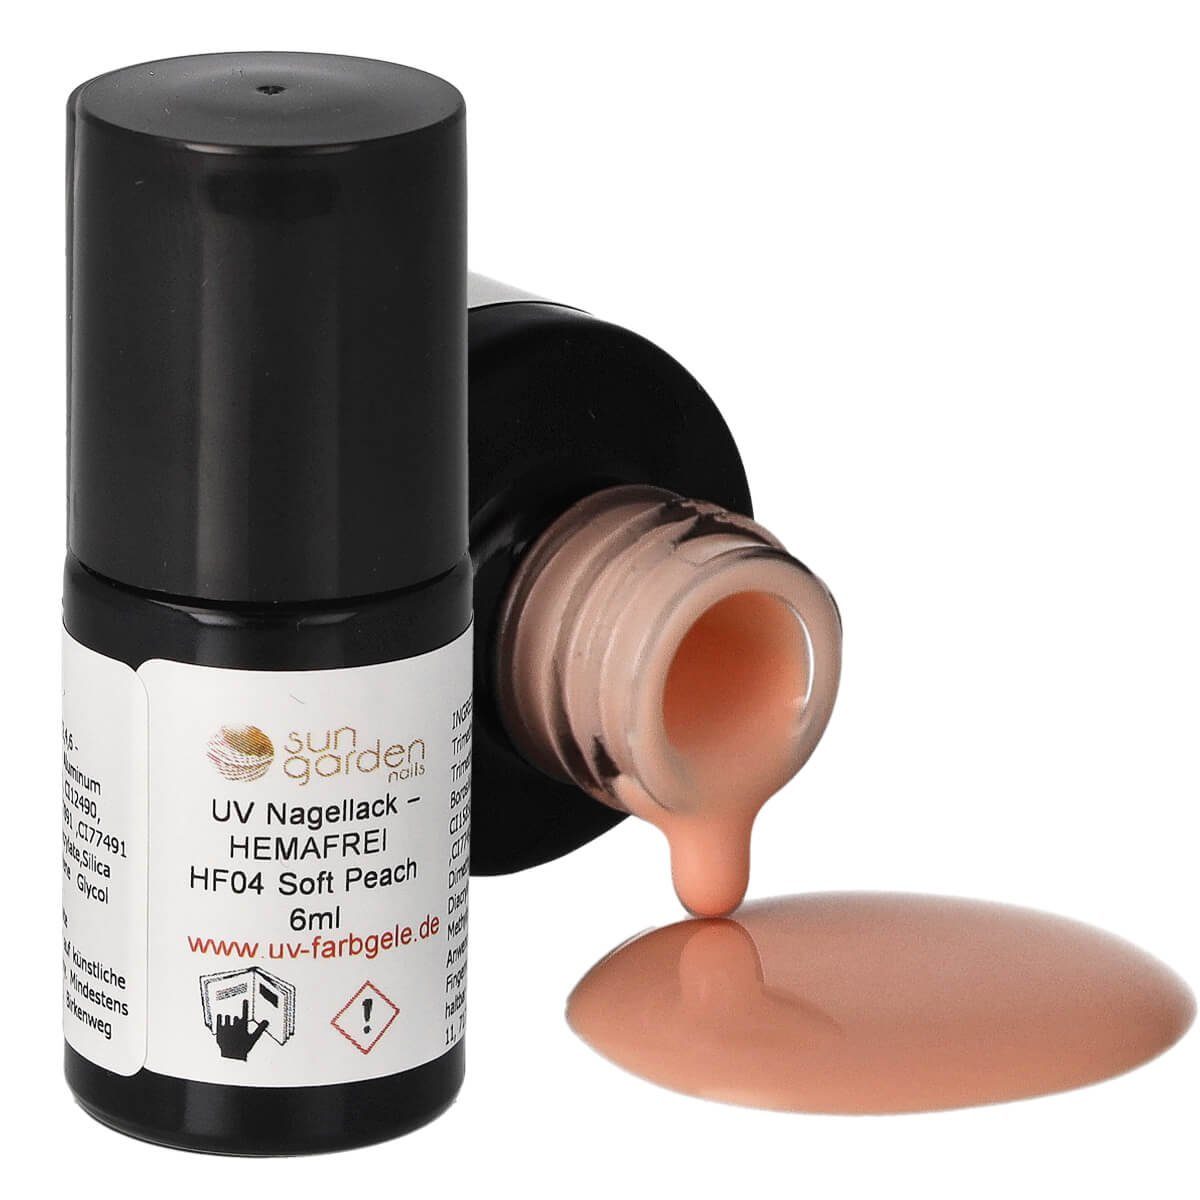 Sun Garden Nails Nagellack HF04 – Nagellack HEMAFREI Soft Peach - 6ml UV